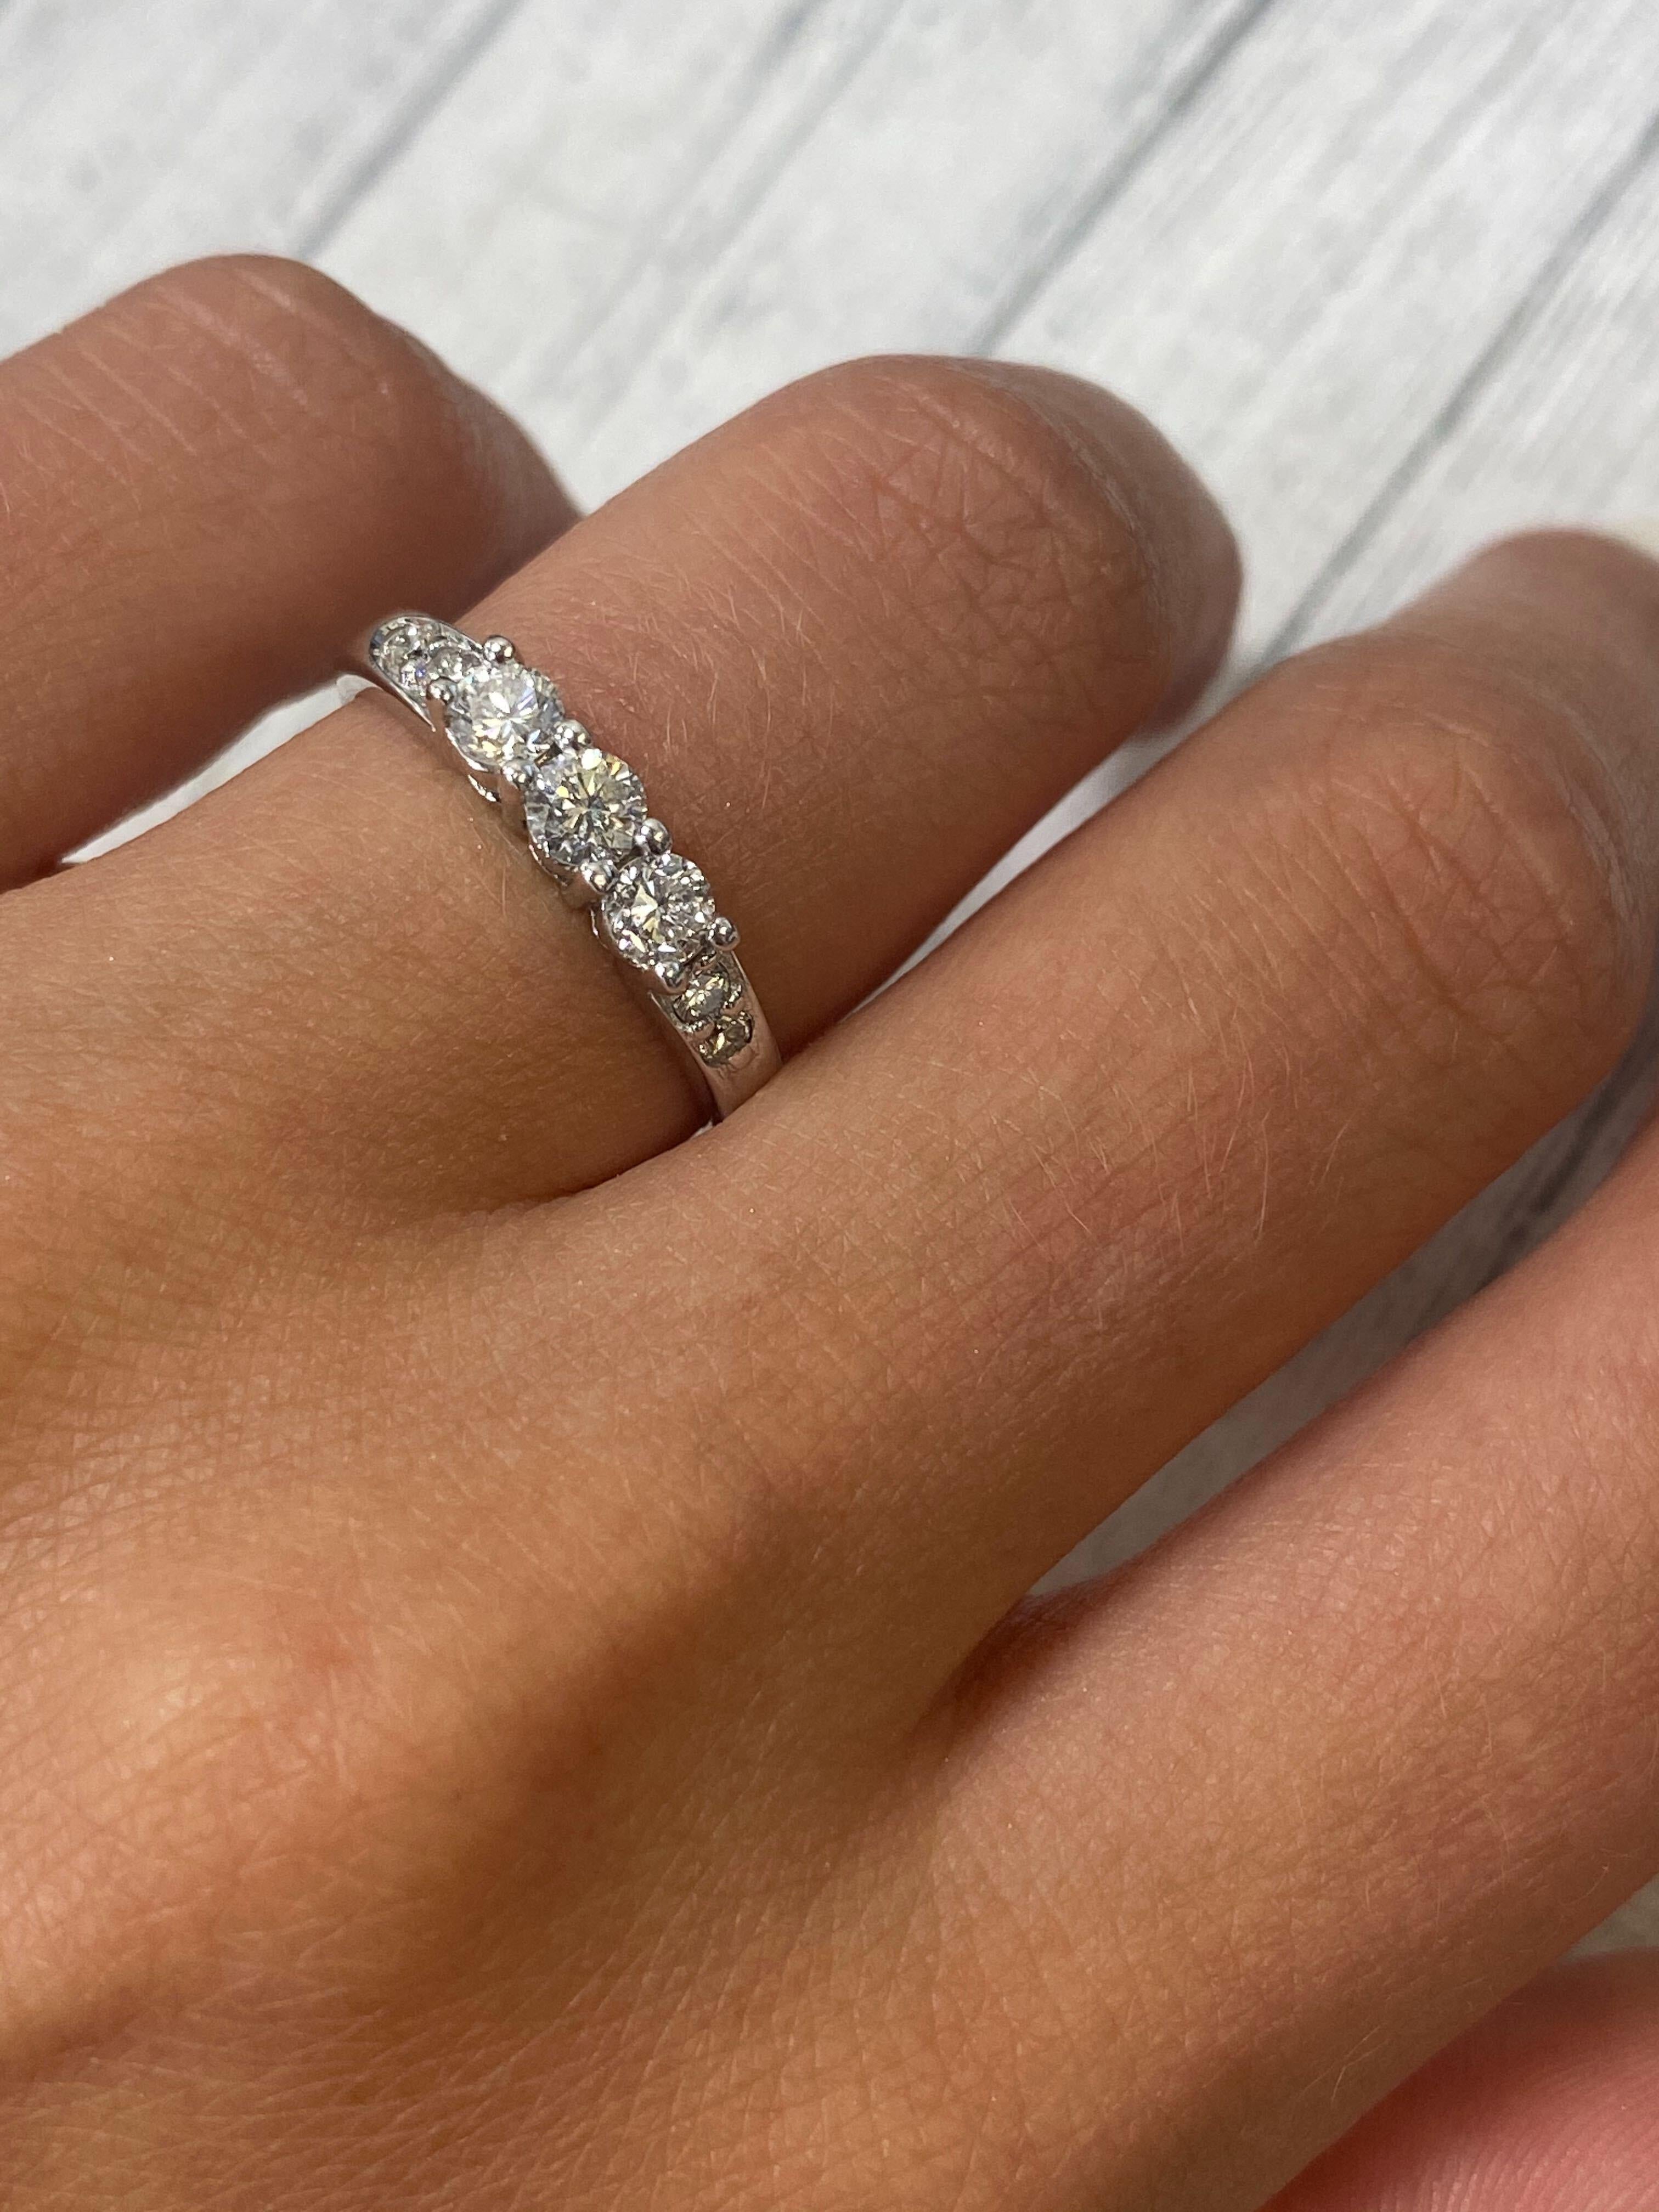 Rachel Koen Three Stone Style Engagement Ring 14K White Gold 0.55Cttw For Sale 1